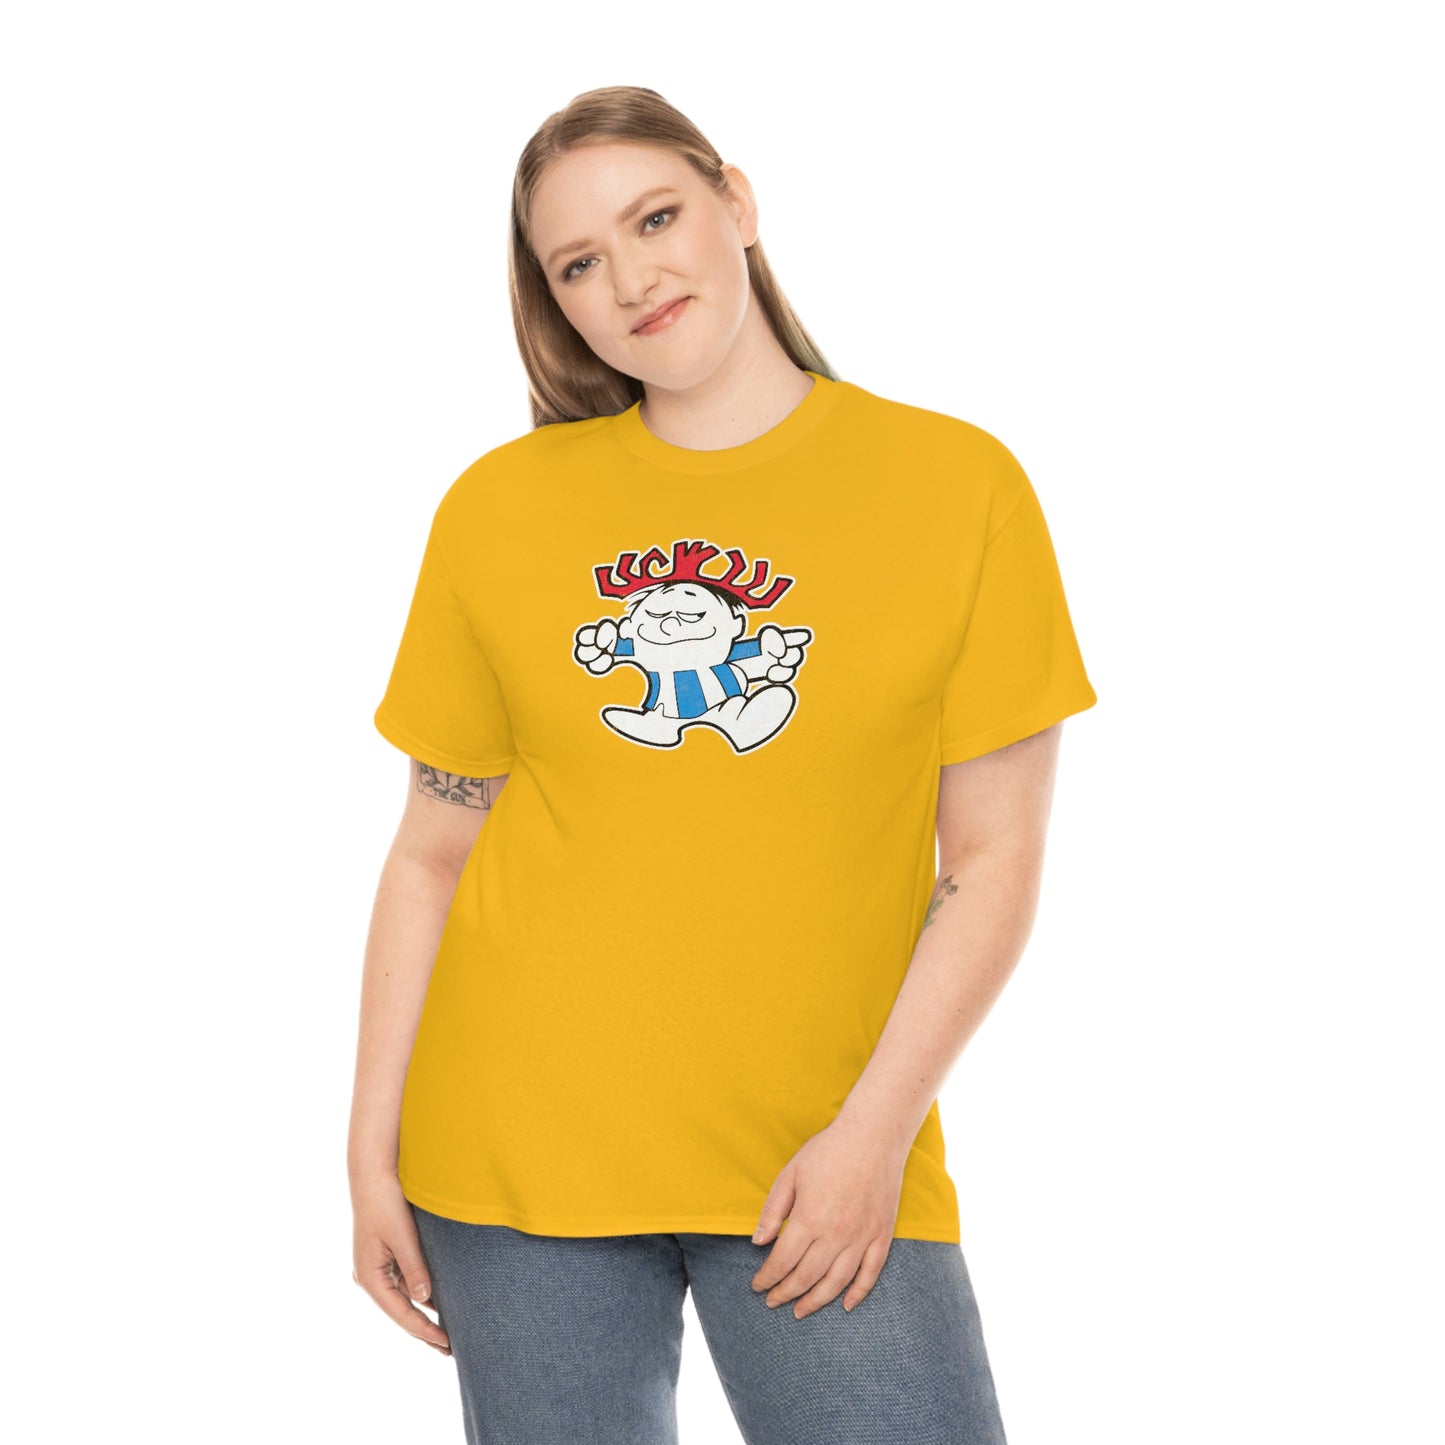 Punchy T-Shirt